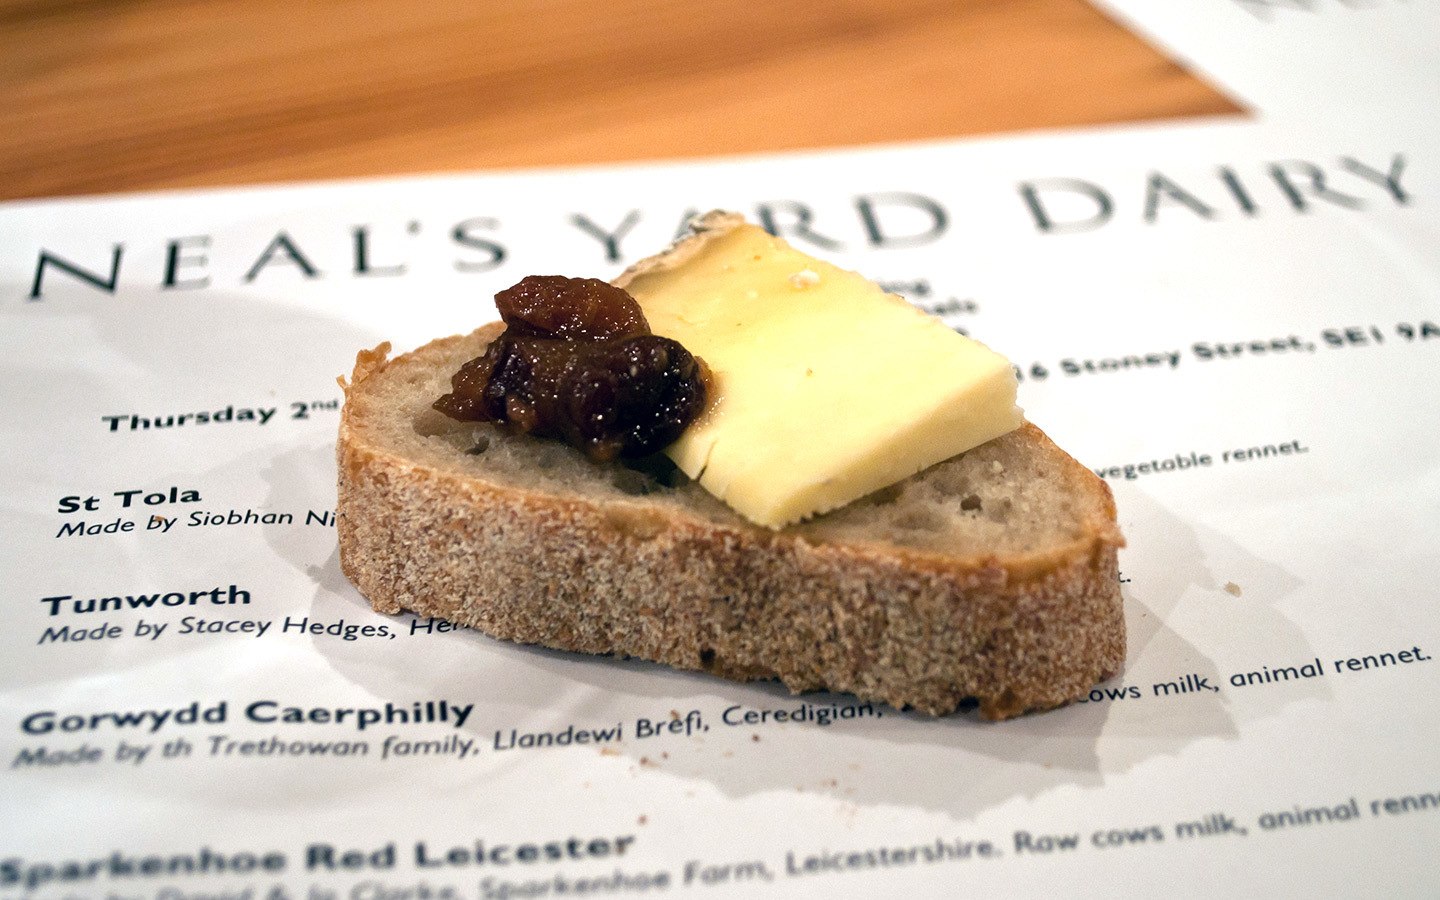 London food tour at Neal's Yard Dairy